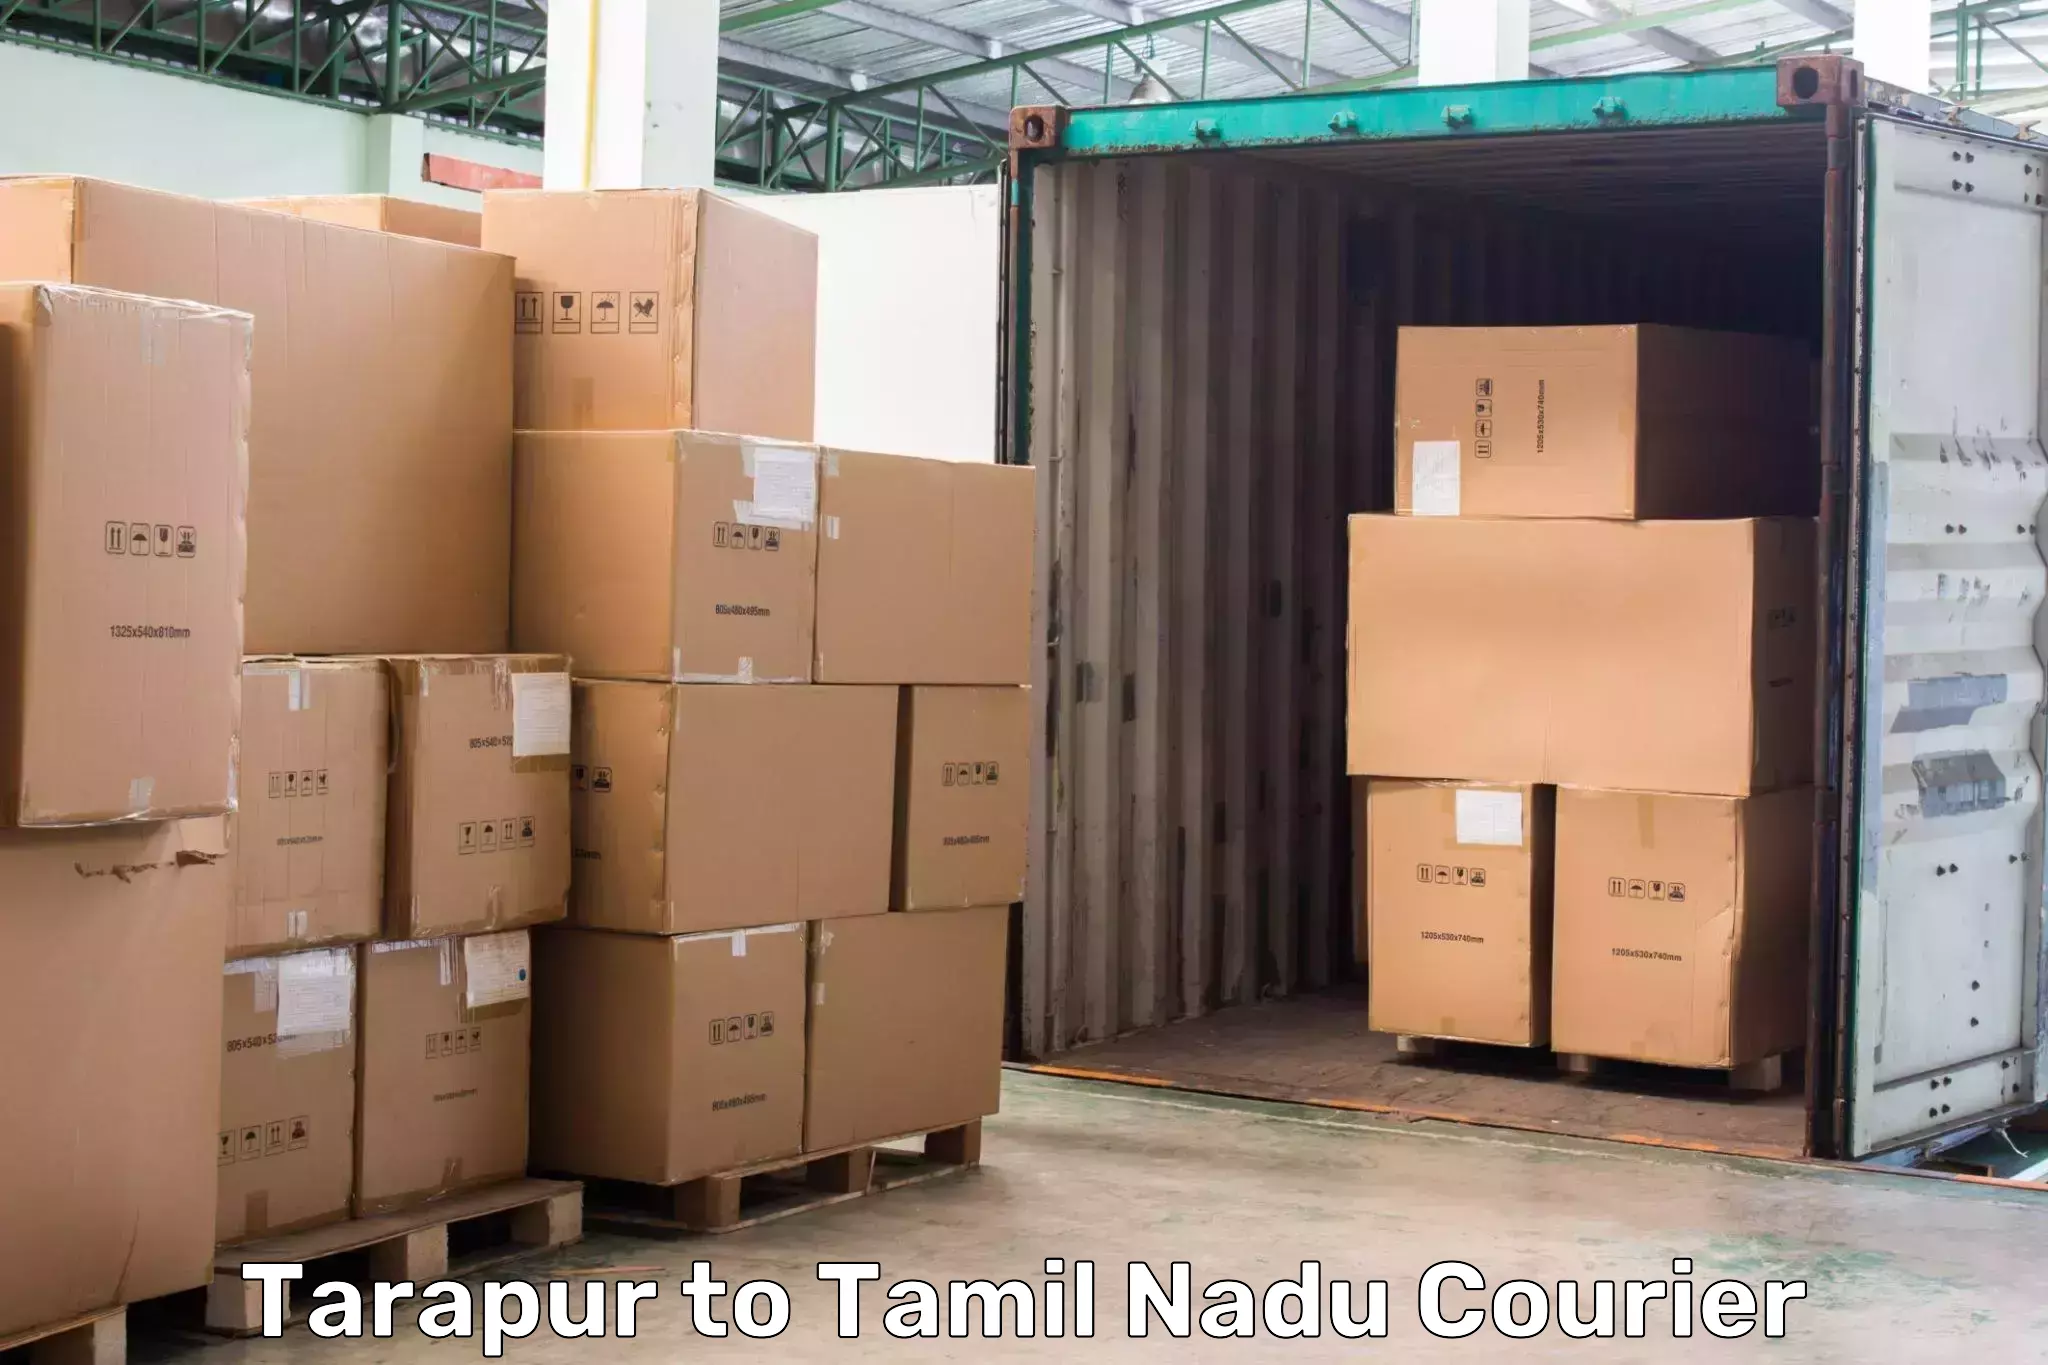 24-hour courier service Tarapur to Tamil Nadu